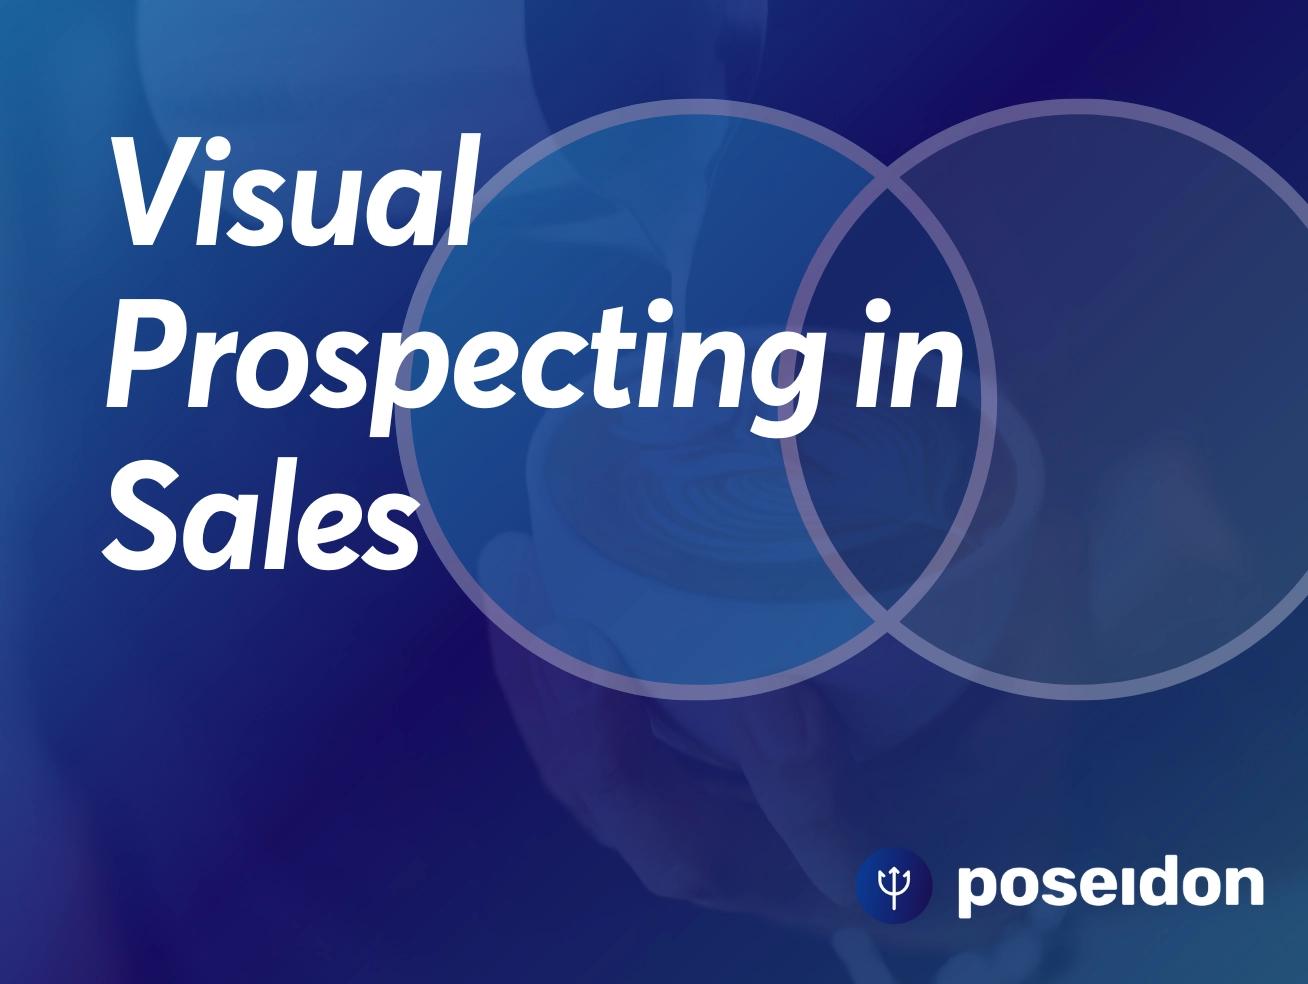 Visual Prospecting in Sales